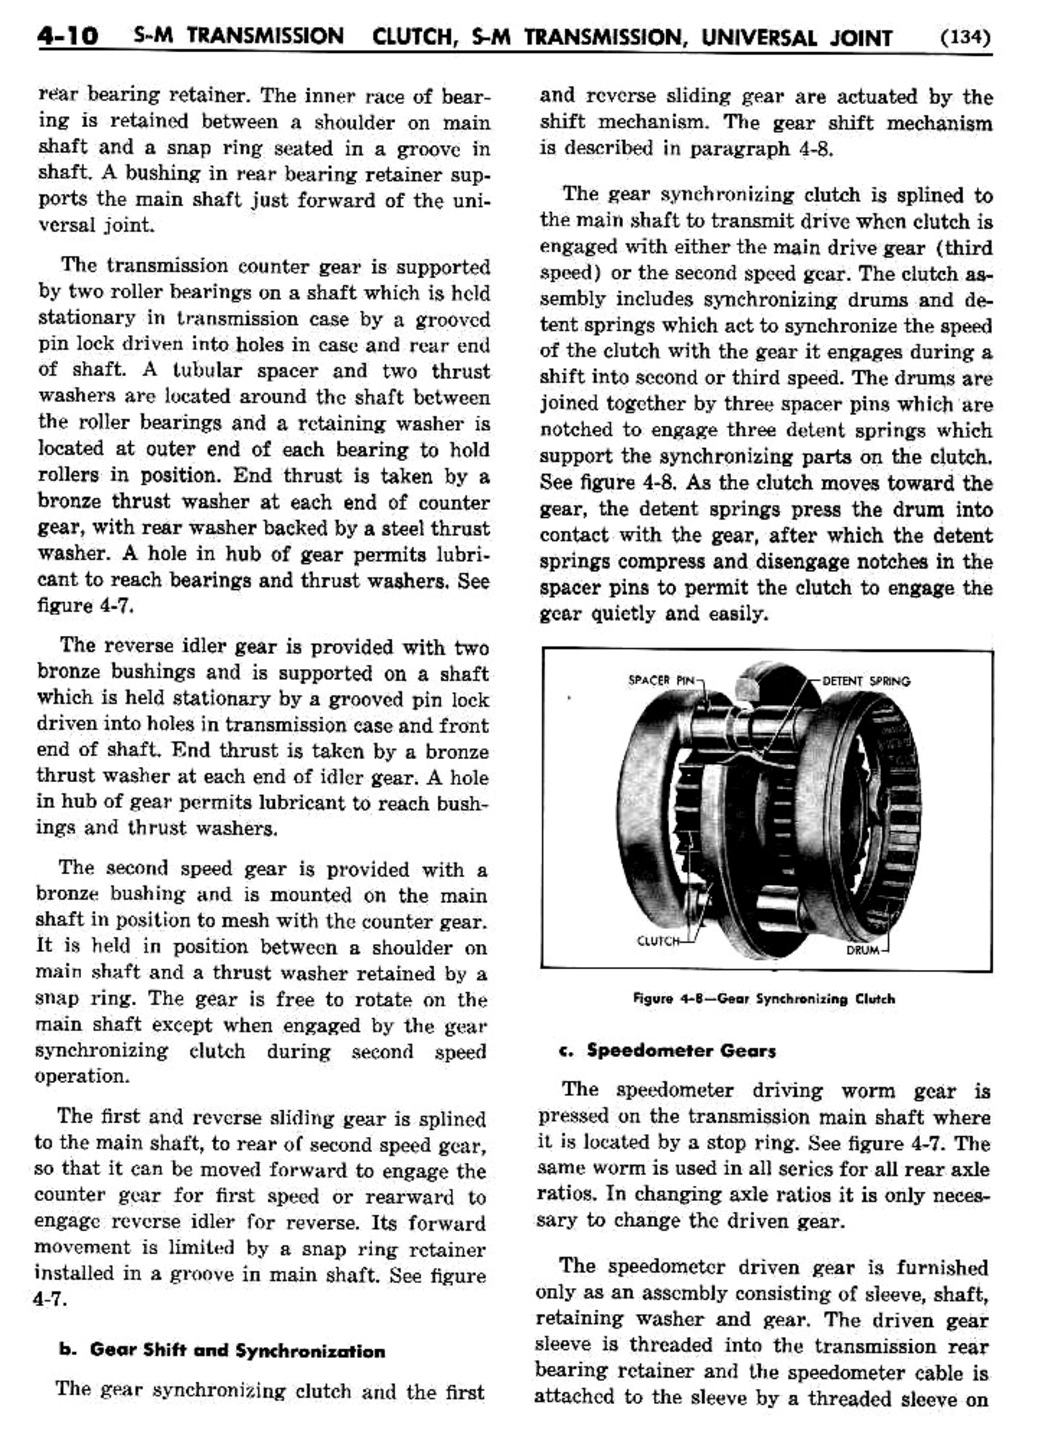 n_05 1956 Buick Shop Manual - Clutch & Trans-010-010.jpg